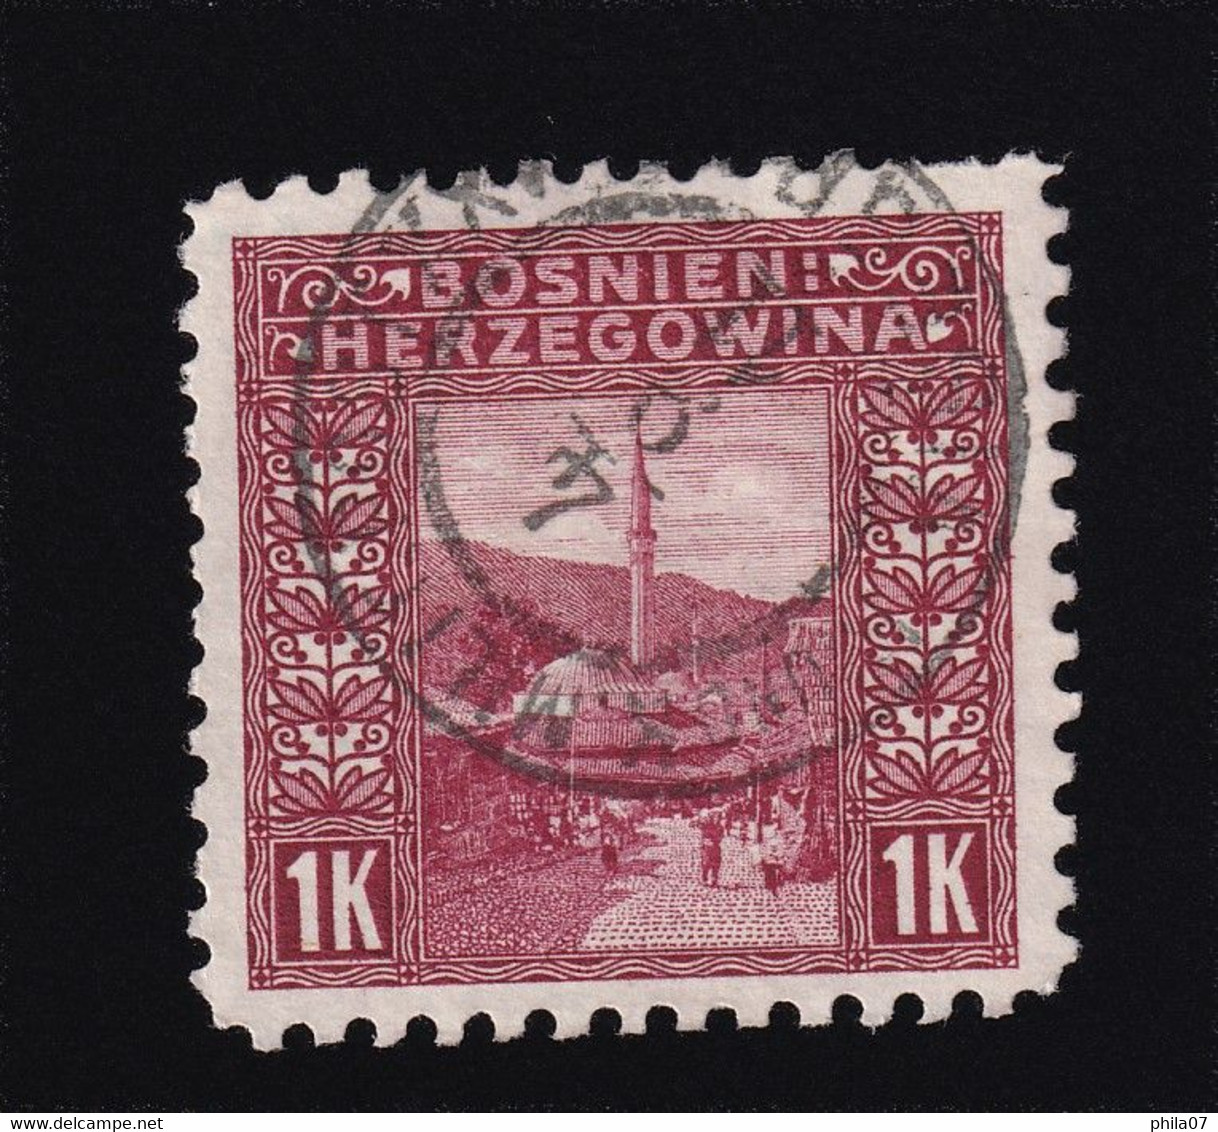 BOSNIA AND HERZEGOVINA - Landscape Stamp 1 Krune, Perforation 9 ½, Stamp Cancelled - Bosnie-Herzegovine